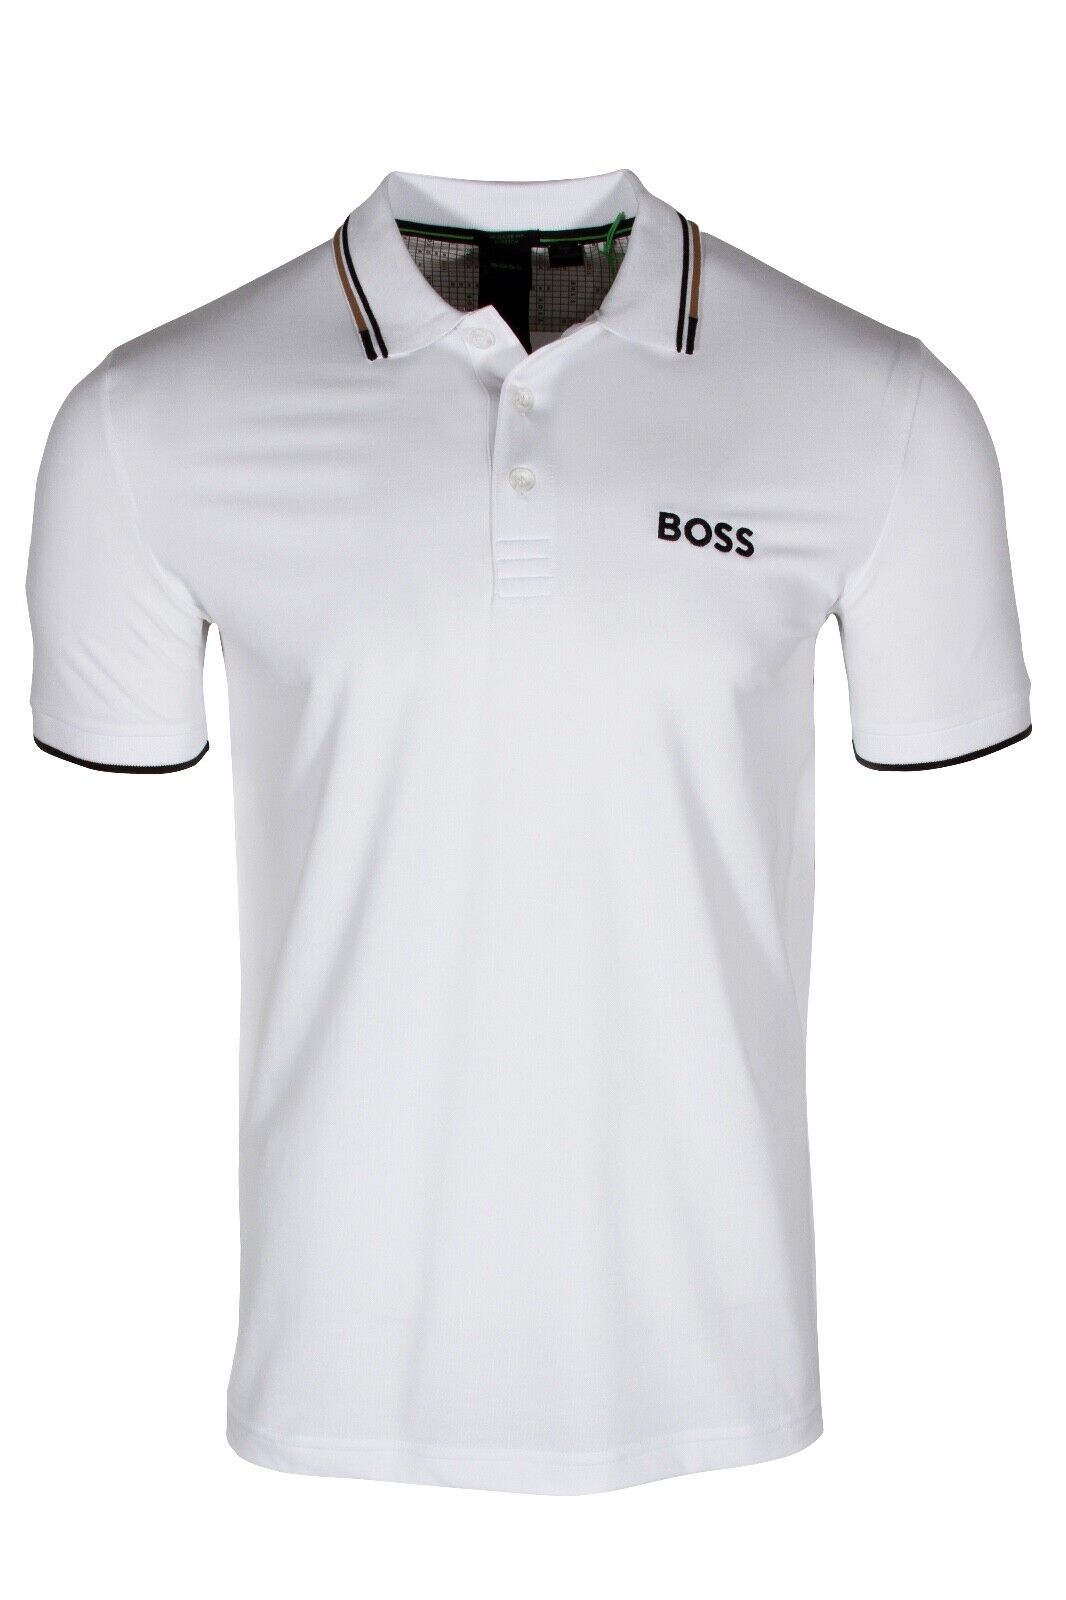 HUGO BOSS Paddy Pro Men’s Cotton-Blend Polo Shirt in White 50469094-106